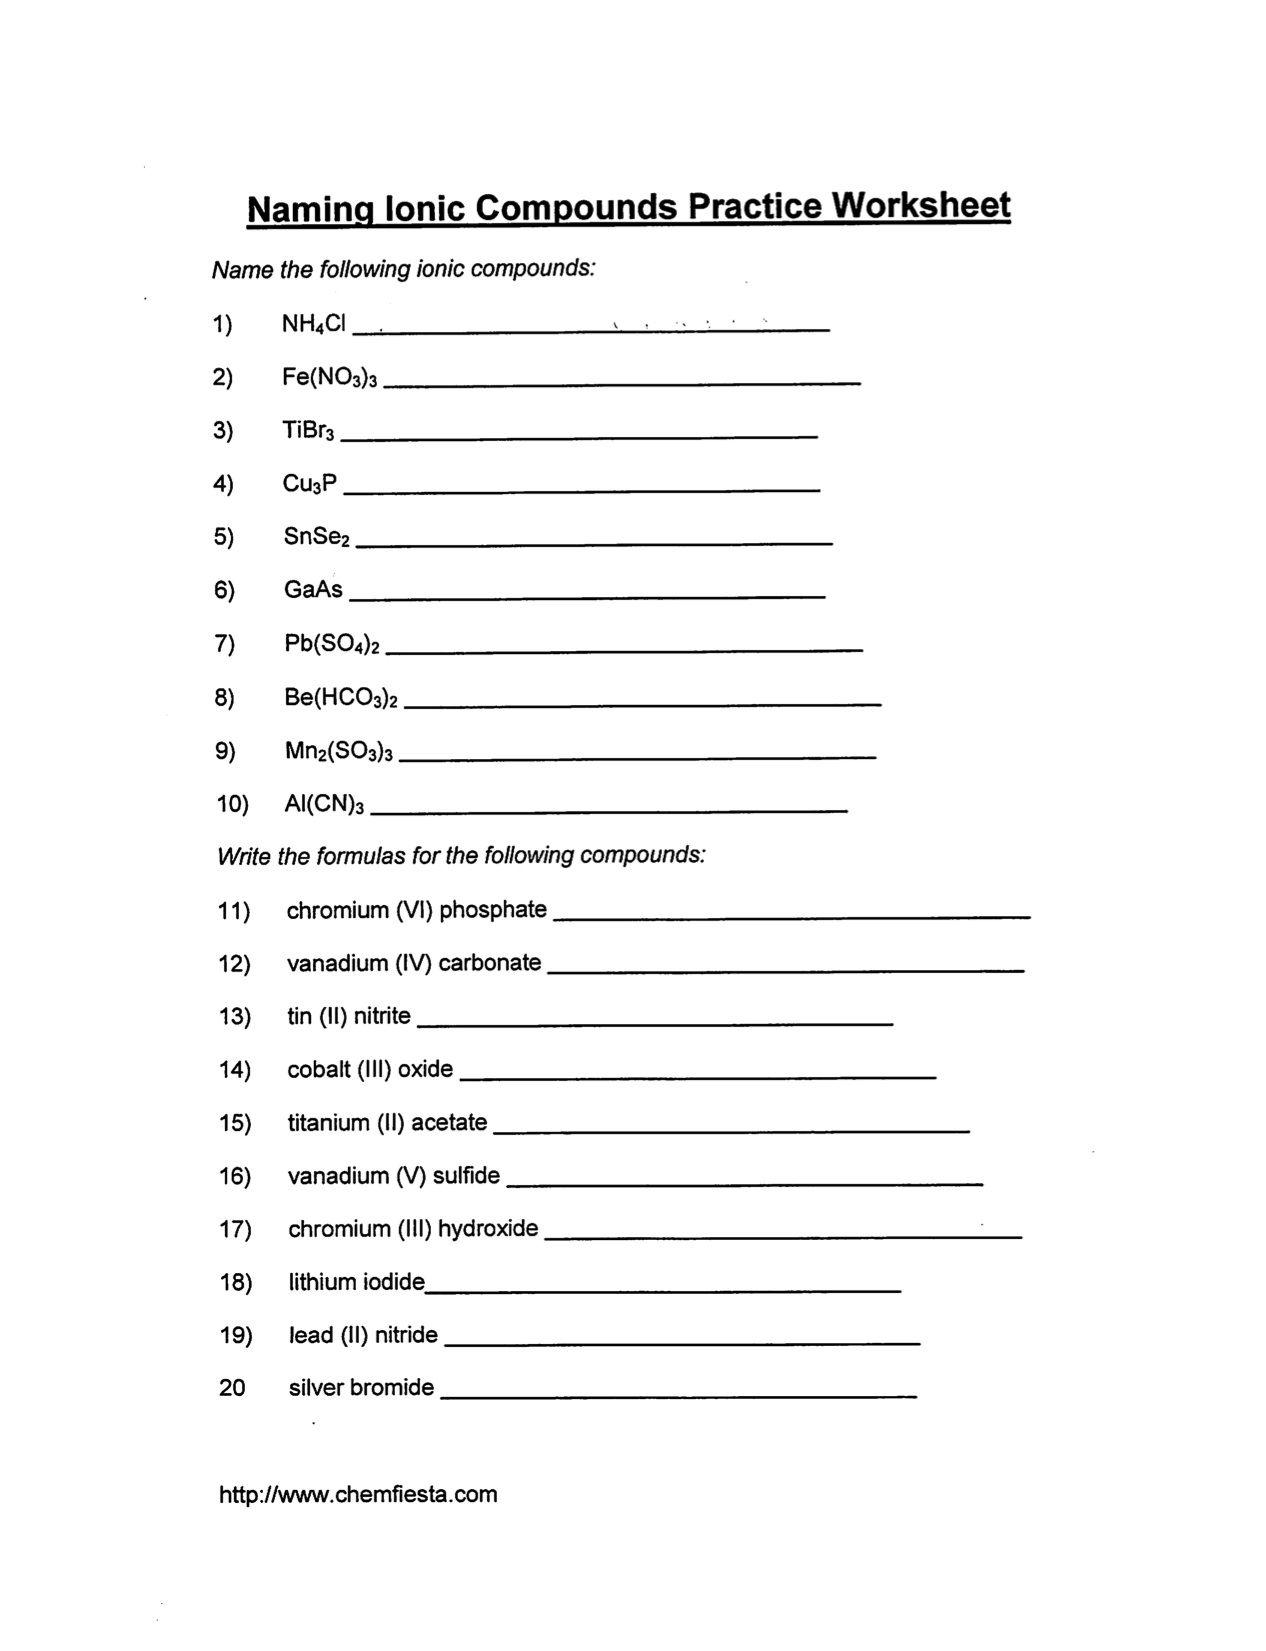 iupac nomenclature practice worksheet